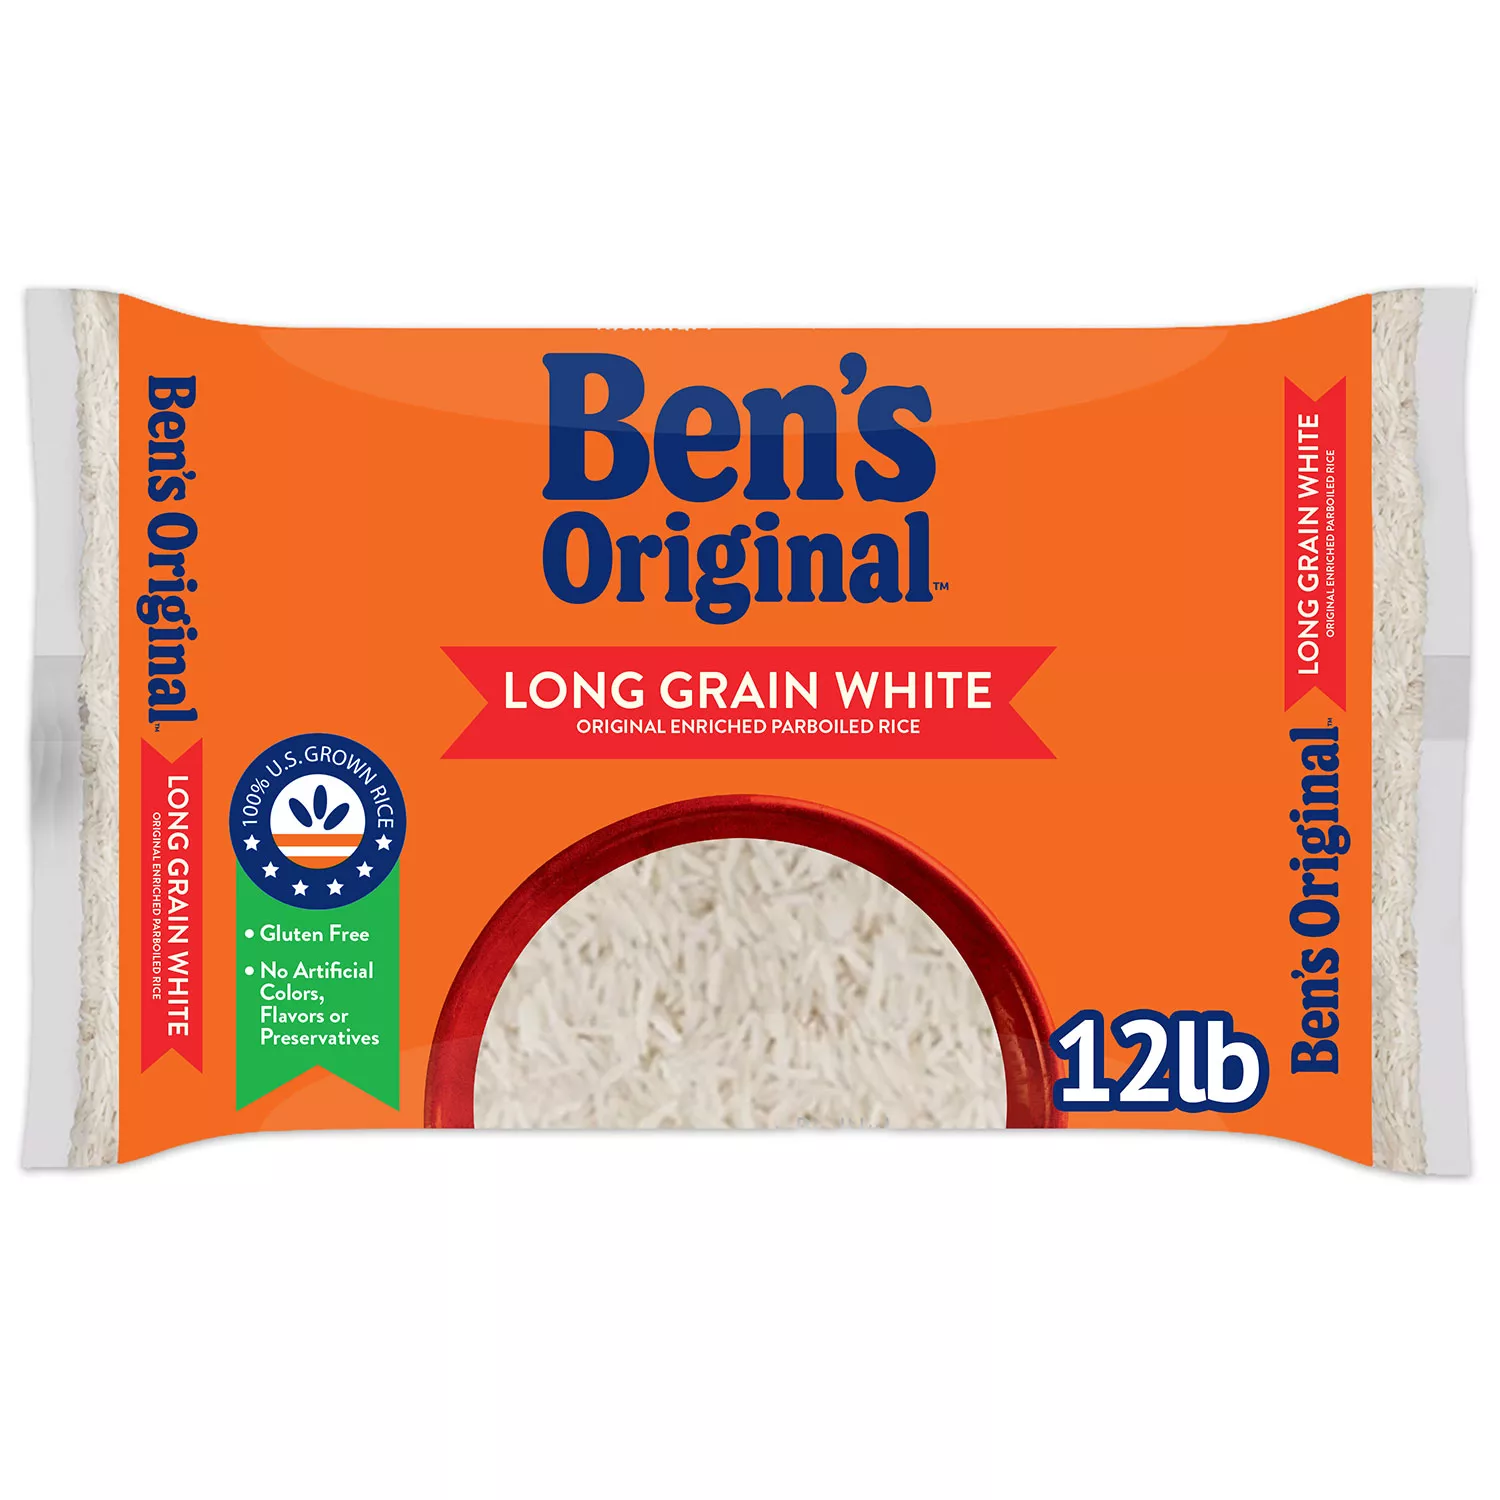 Uncle Ben’s Original Converted Brand Enriched Parboiled Long Grain Rice (12 lb. bag)